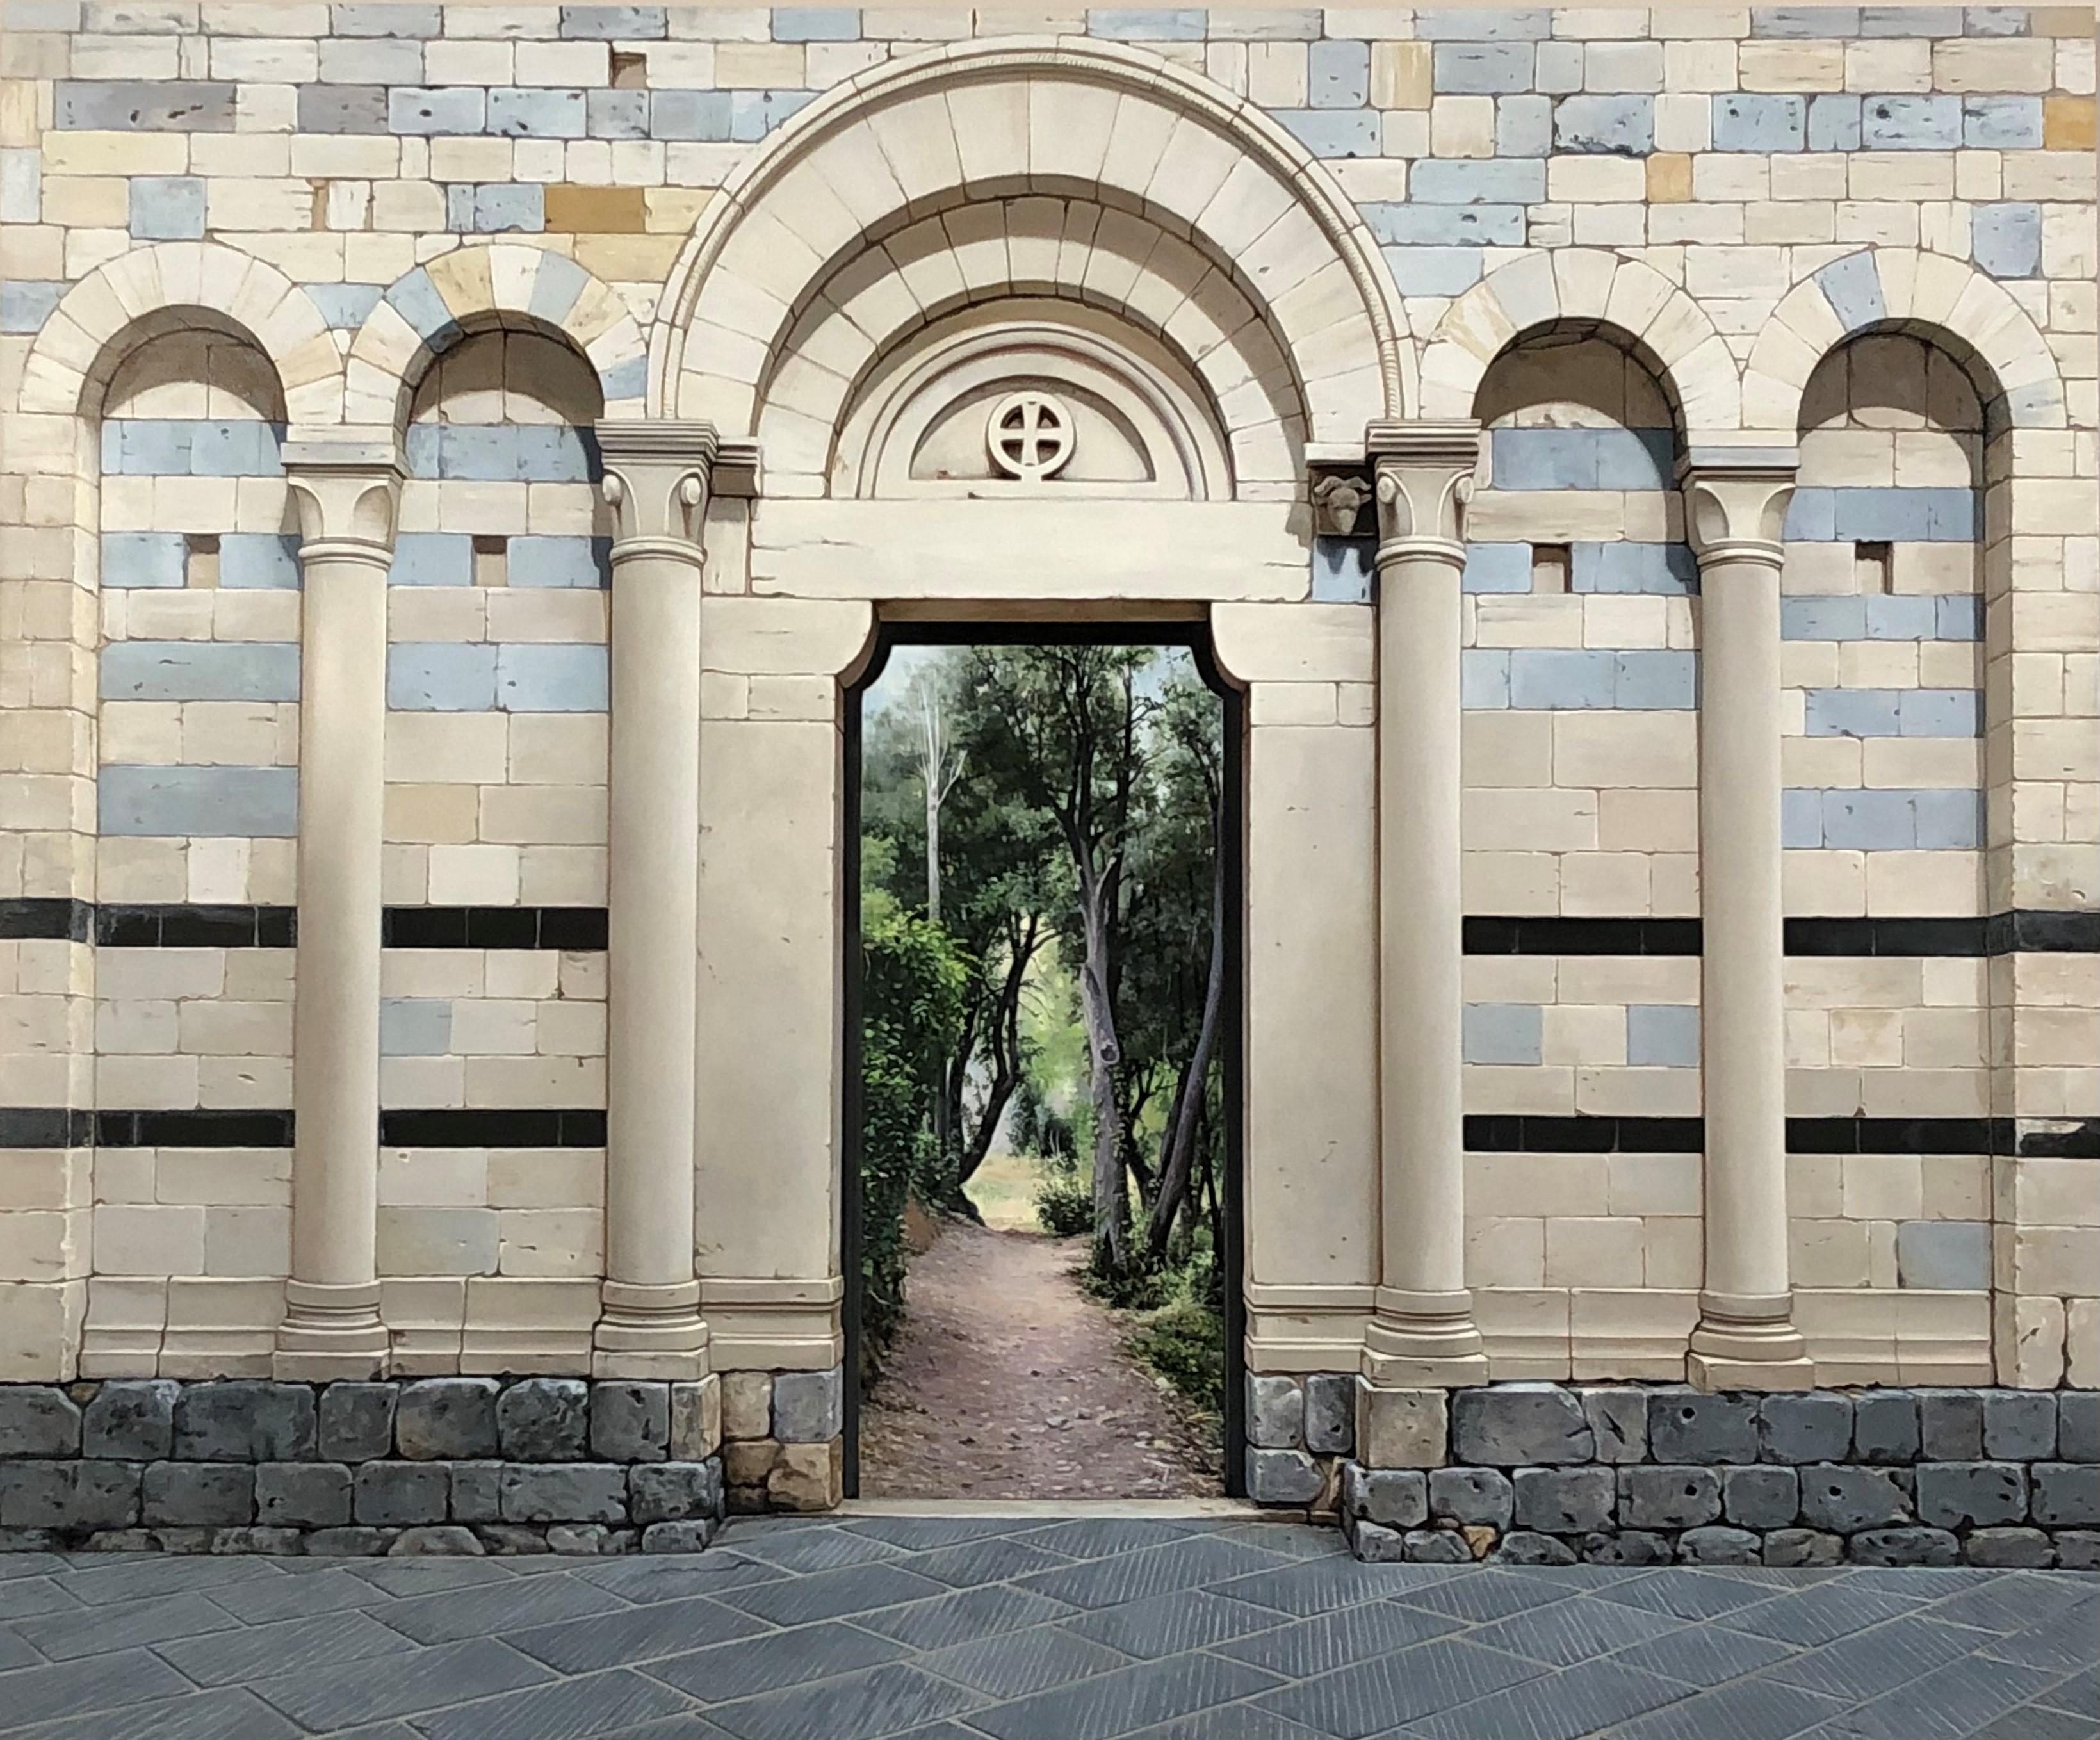 La Prima Pietra-Ancient Architectural Arched Doorways Leading to Lush Landscape